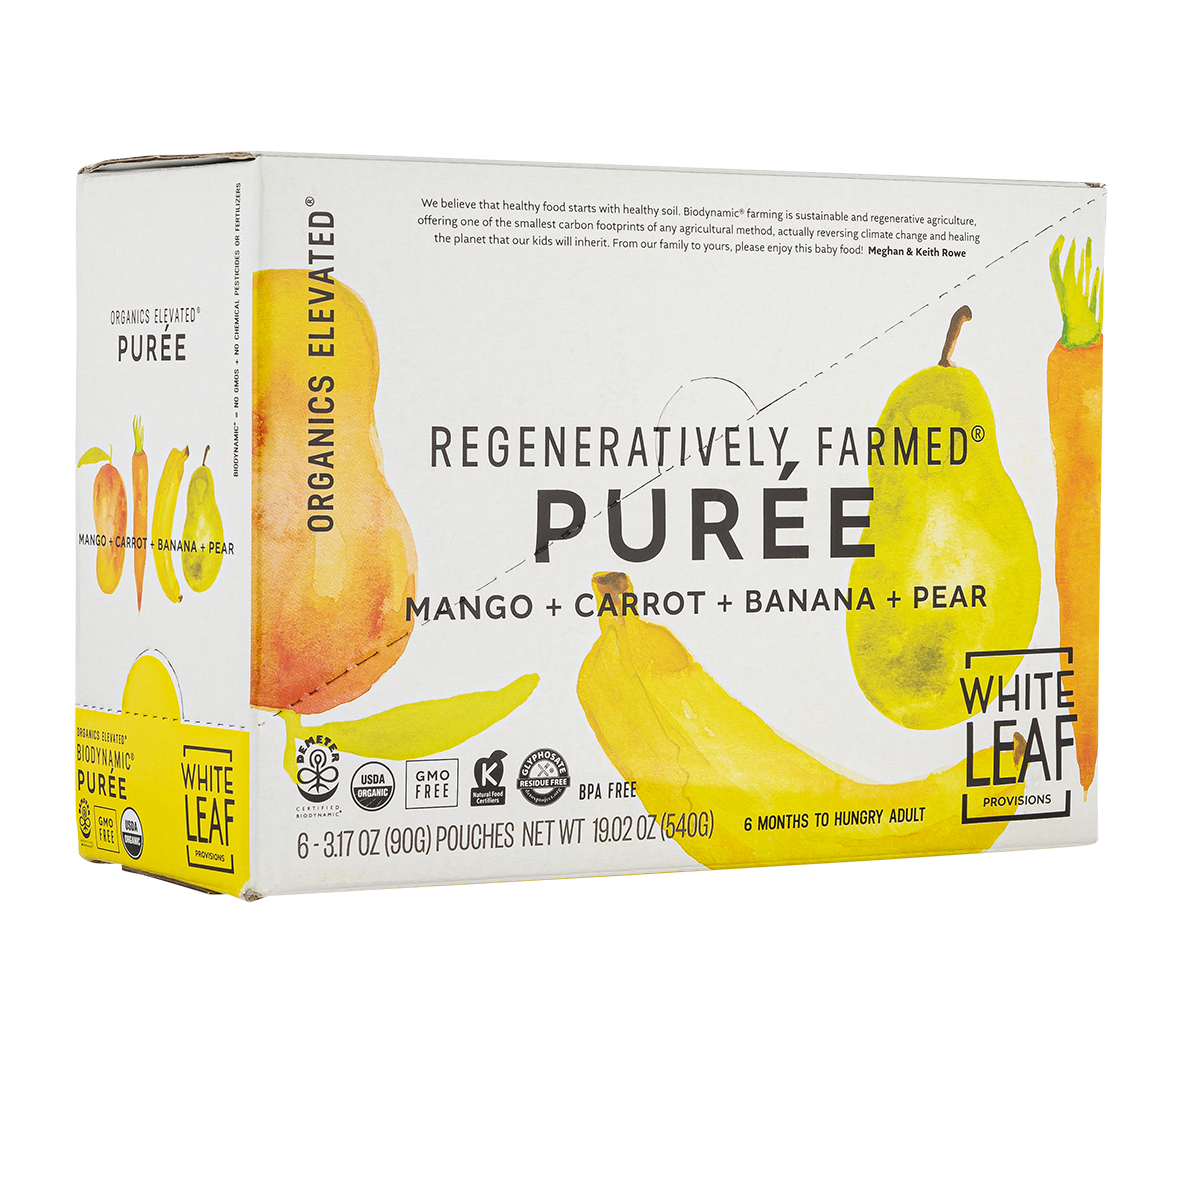 Organic, regeneratively farmed Puree - Mango + Carrot + Banana + Pear